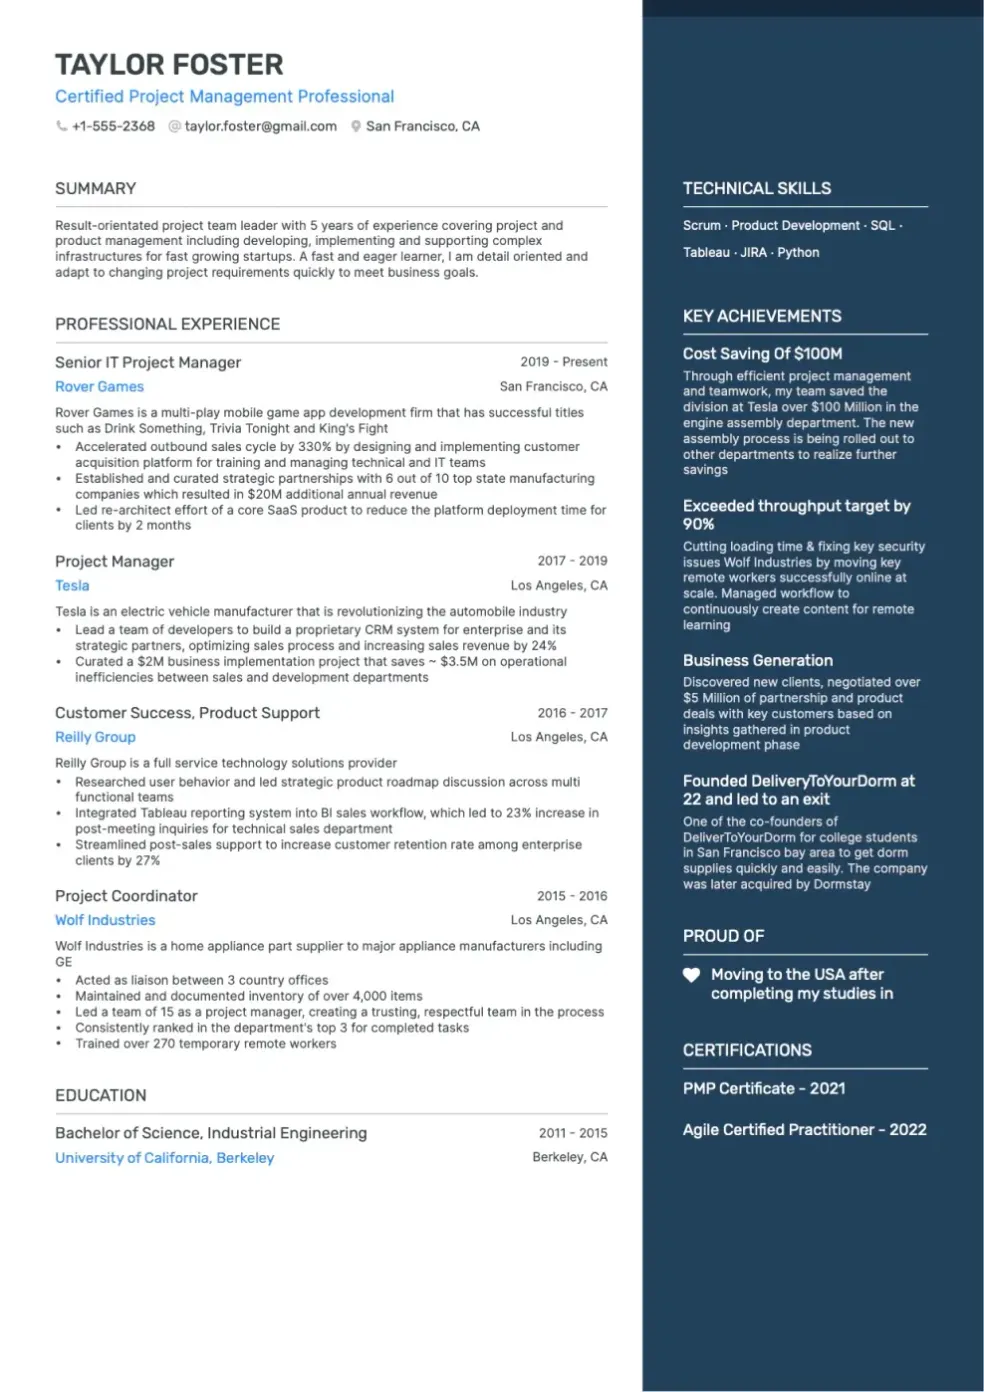 Resume created from Linkedin profile